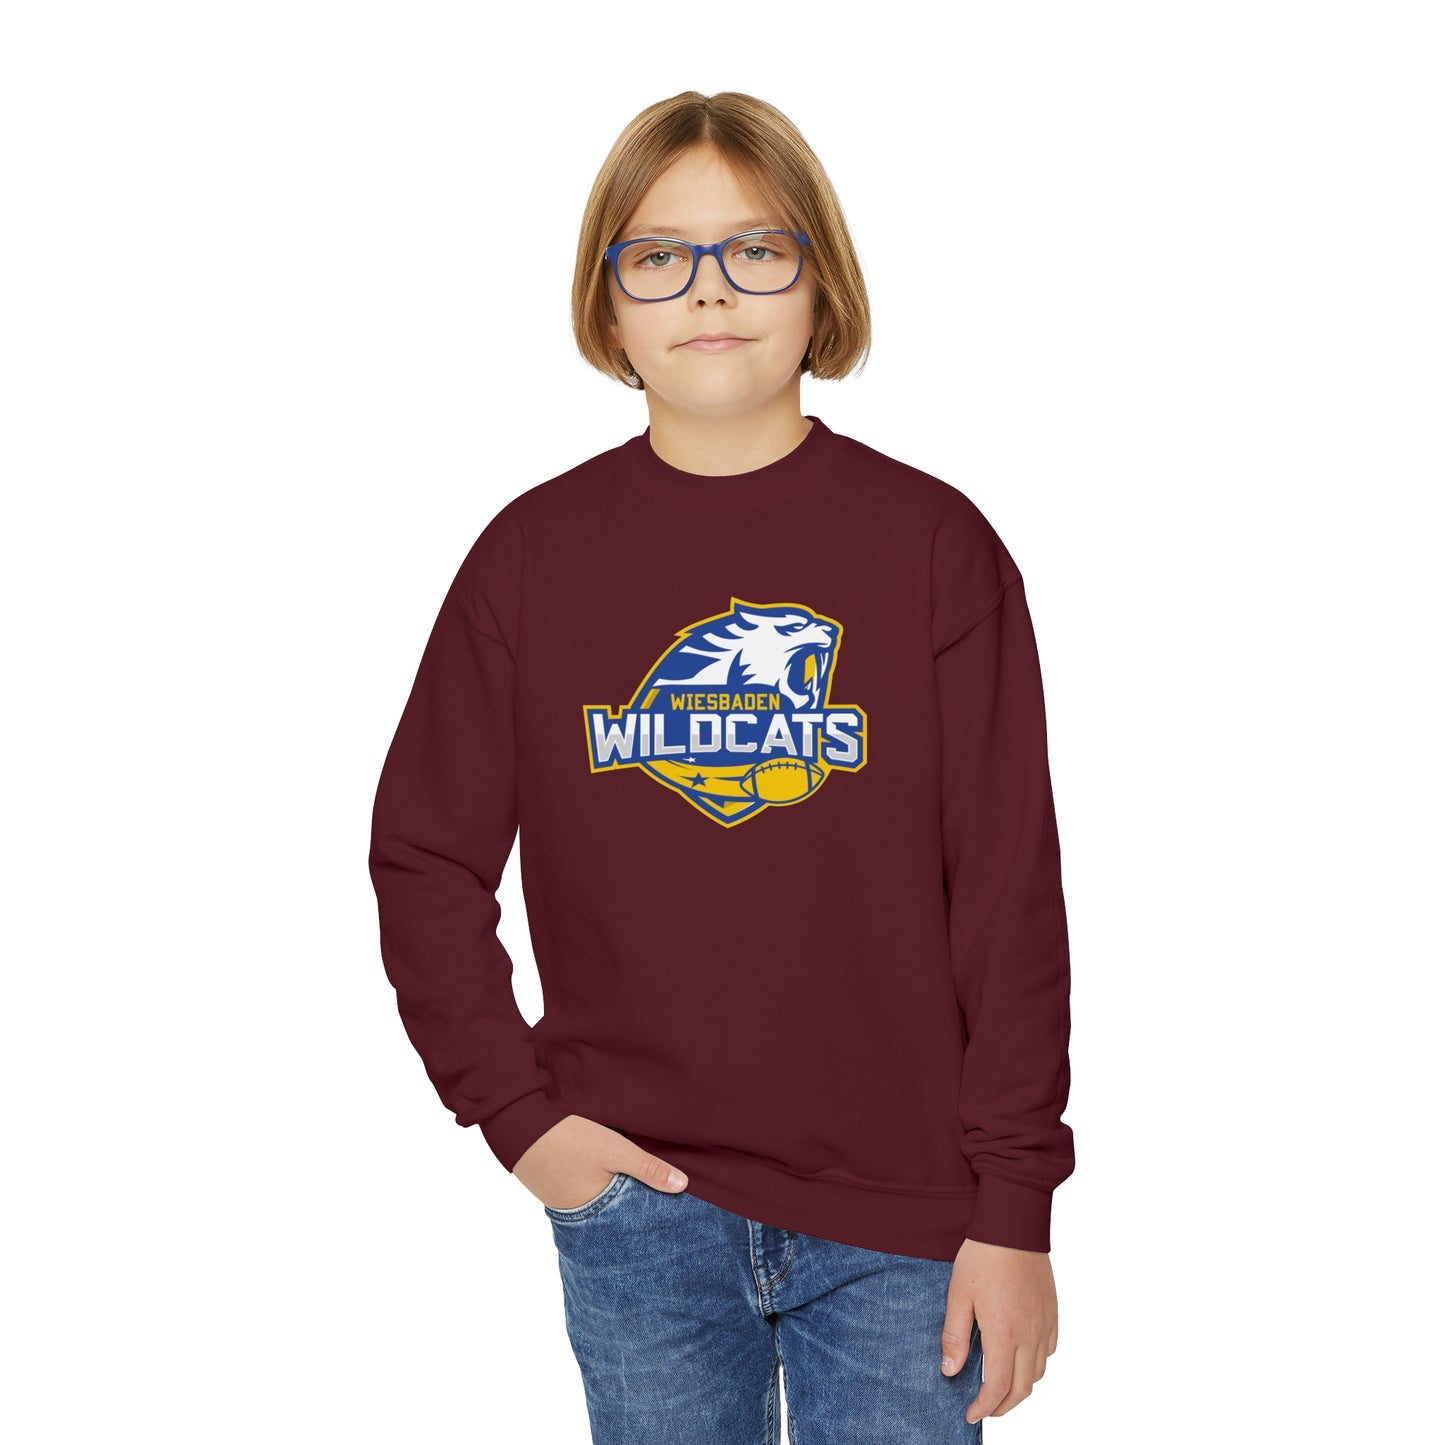 Wildcats - Youth Crewneck Sweatshirt